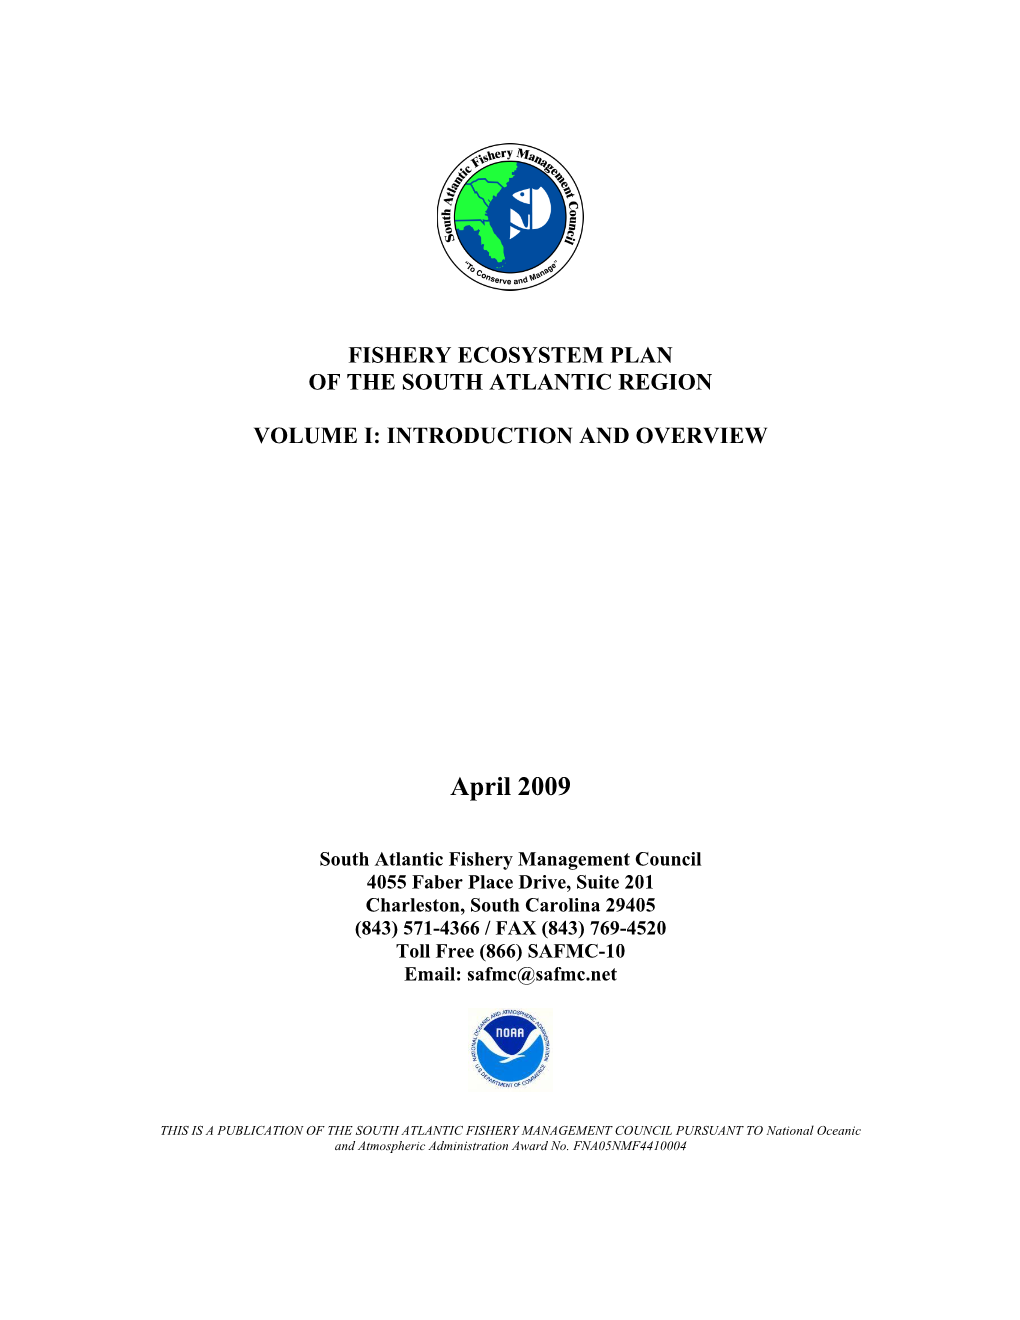 SAFMC Fishery Ecosystem Plan Vol I